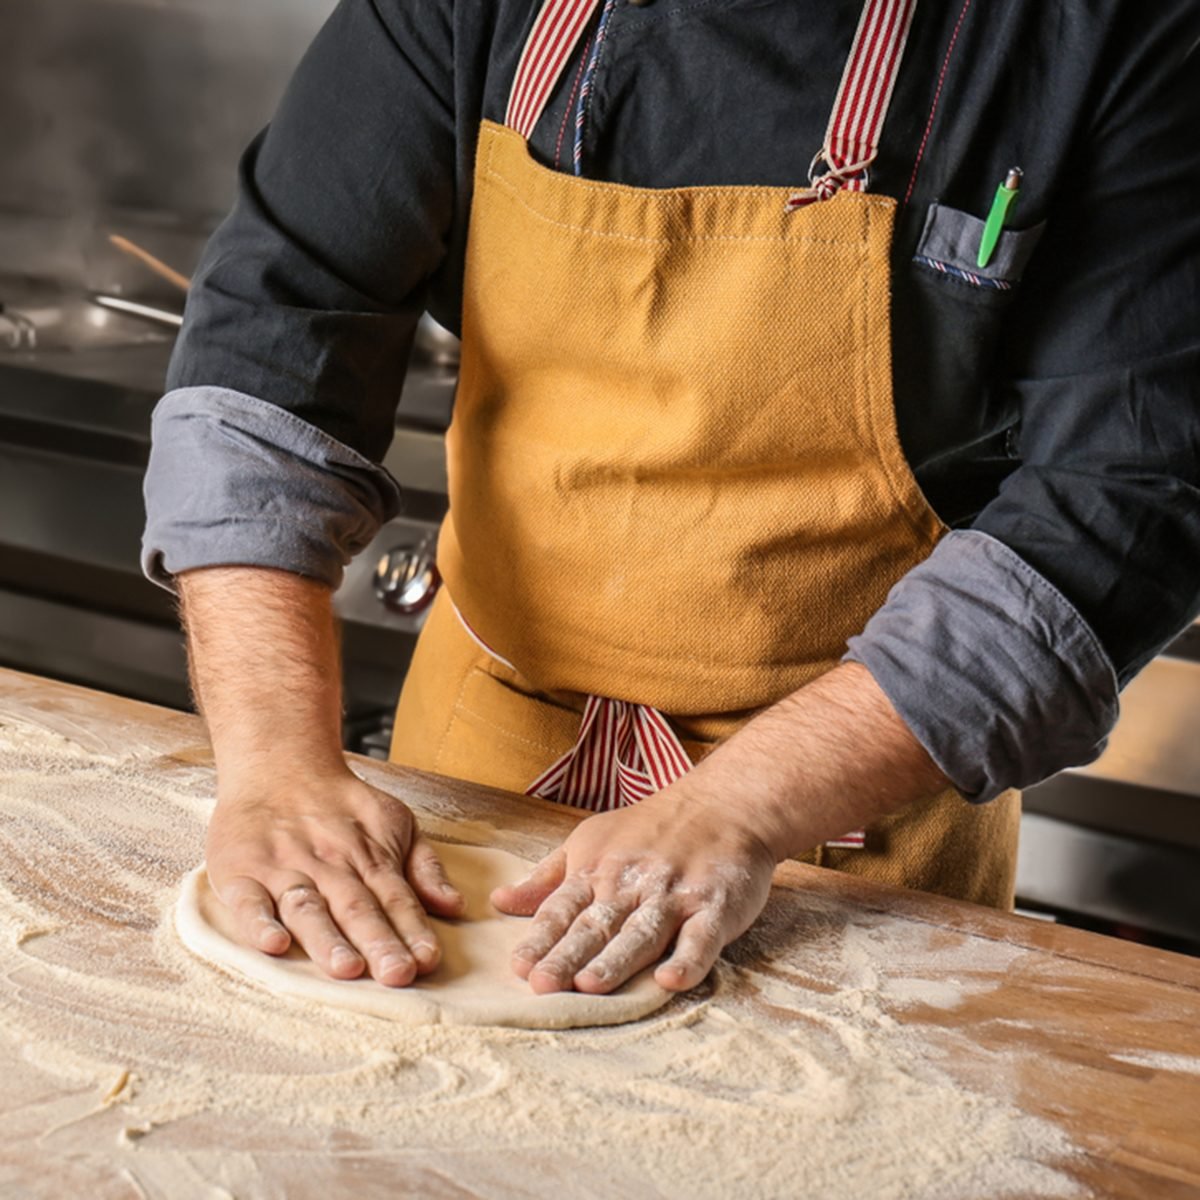 Male chef preparing dough for pizza in restaurant kitchen